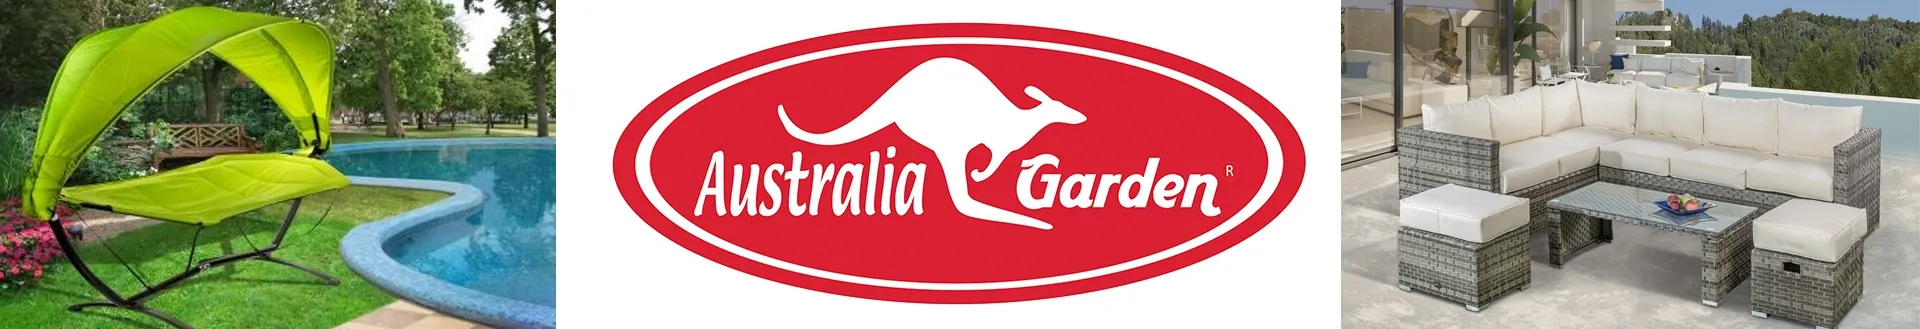 AUSTRALIA GARDEN 12